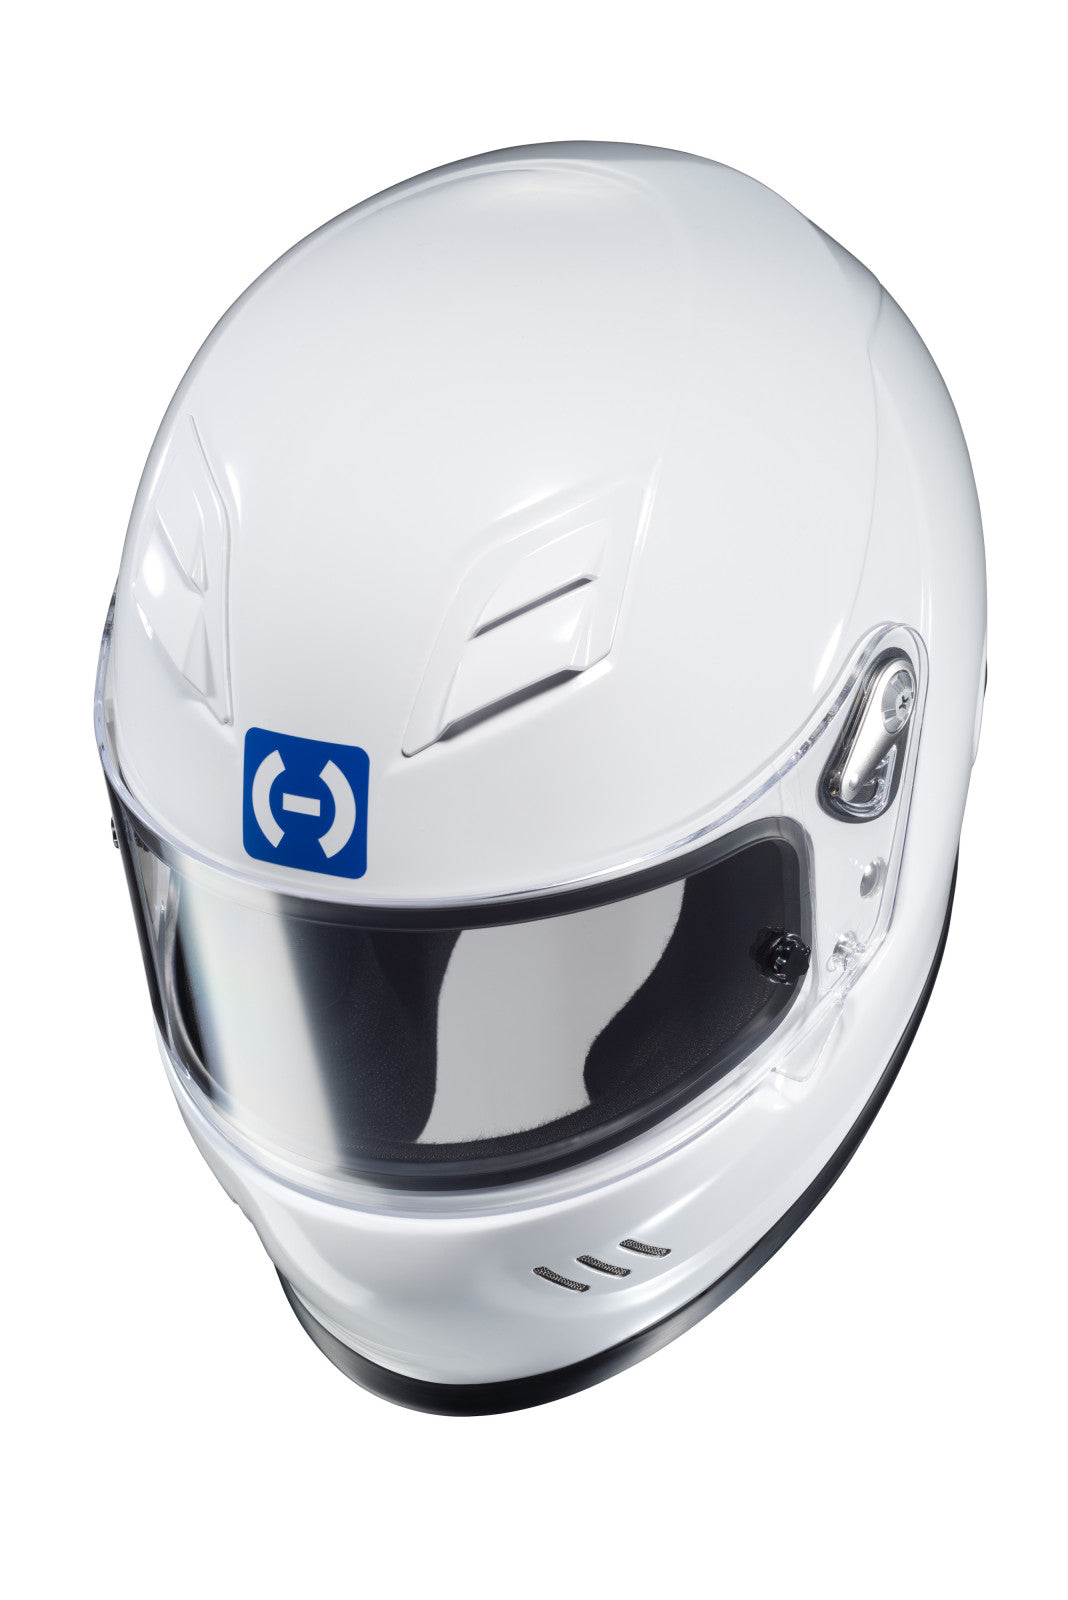 HJC H10 Helmet White Size XS